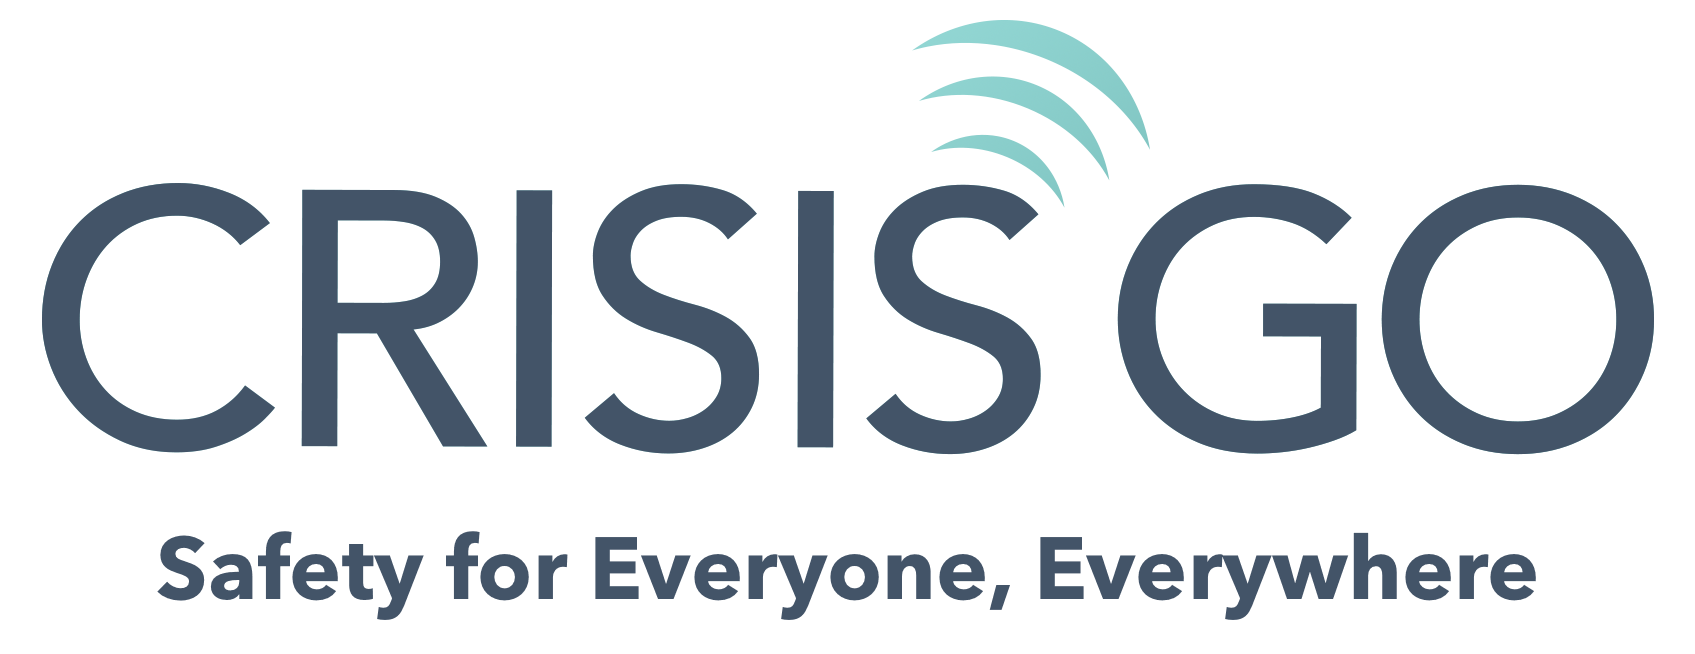 CrisisGO - Safety for Everyone, Everywhere Logo